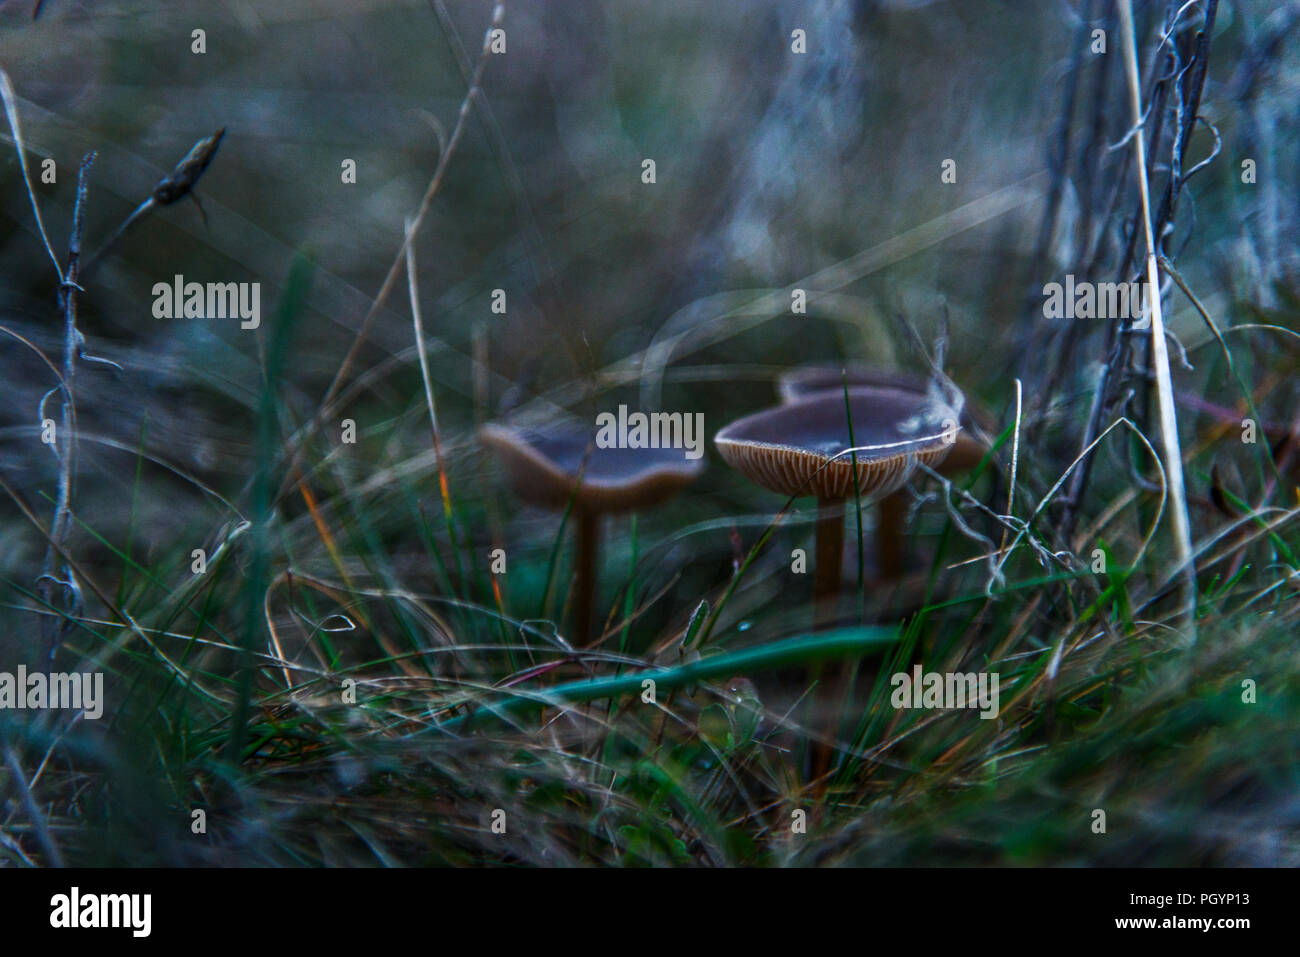 Mushrooms Grey Little In The Grass Closeup Stock Photo